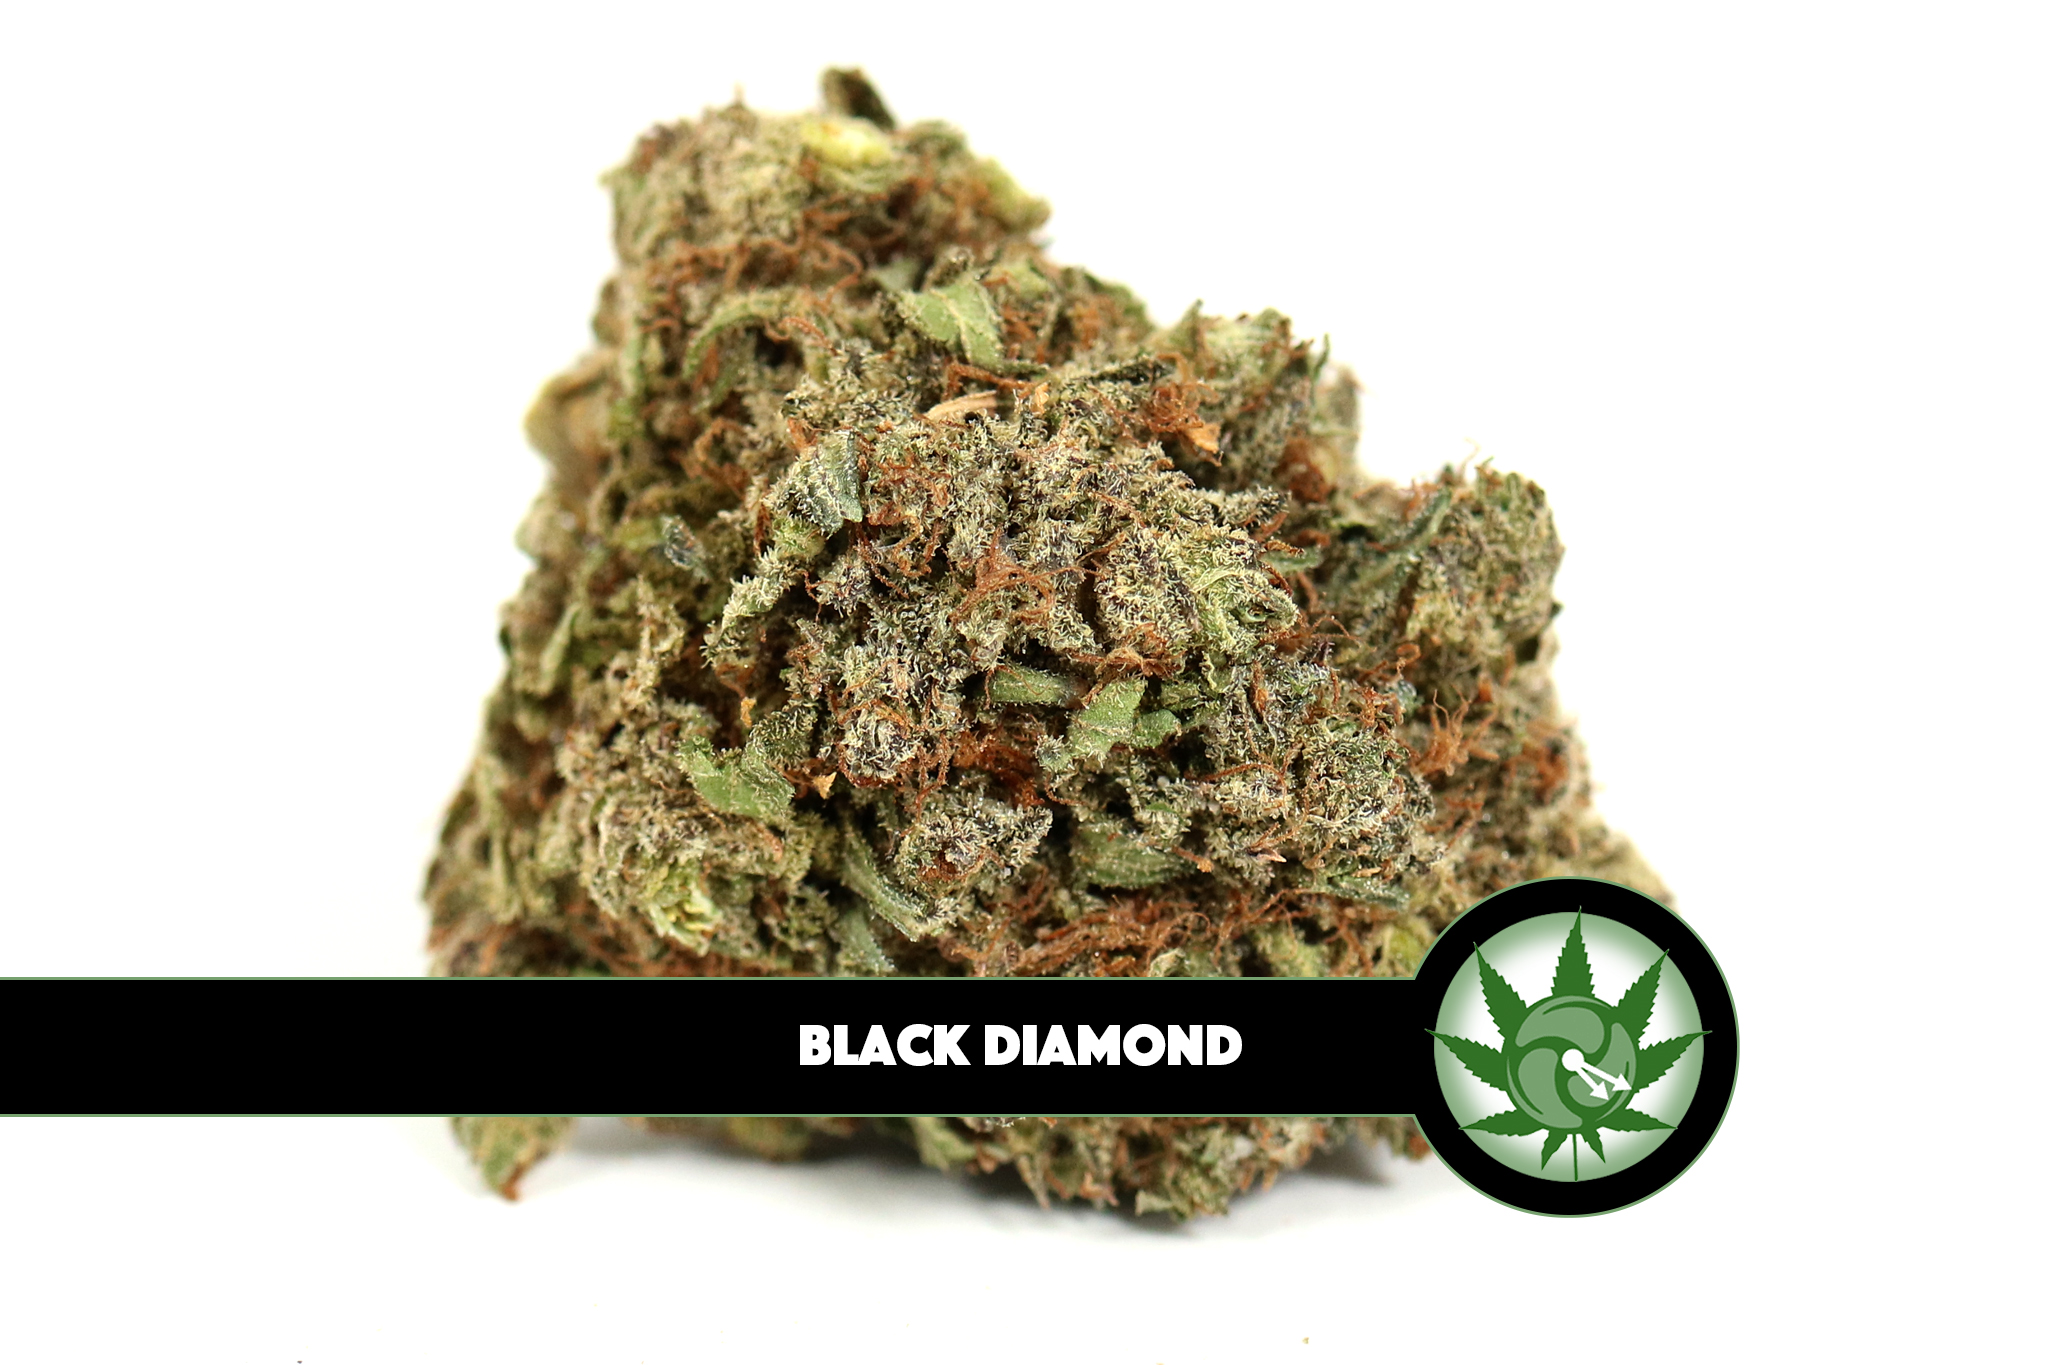 Buy Black Diamond Marijuana Online in Canada - 4:20 Spot Canada